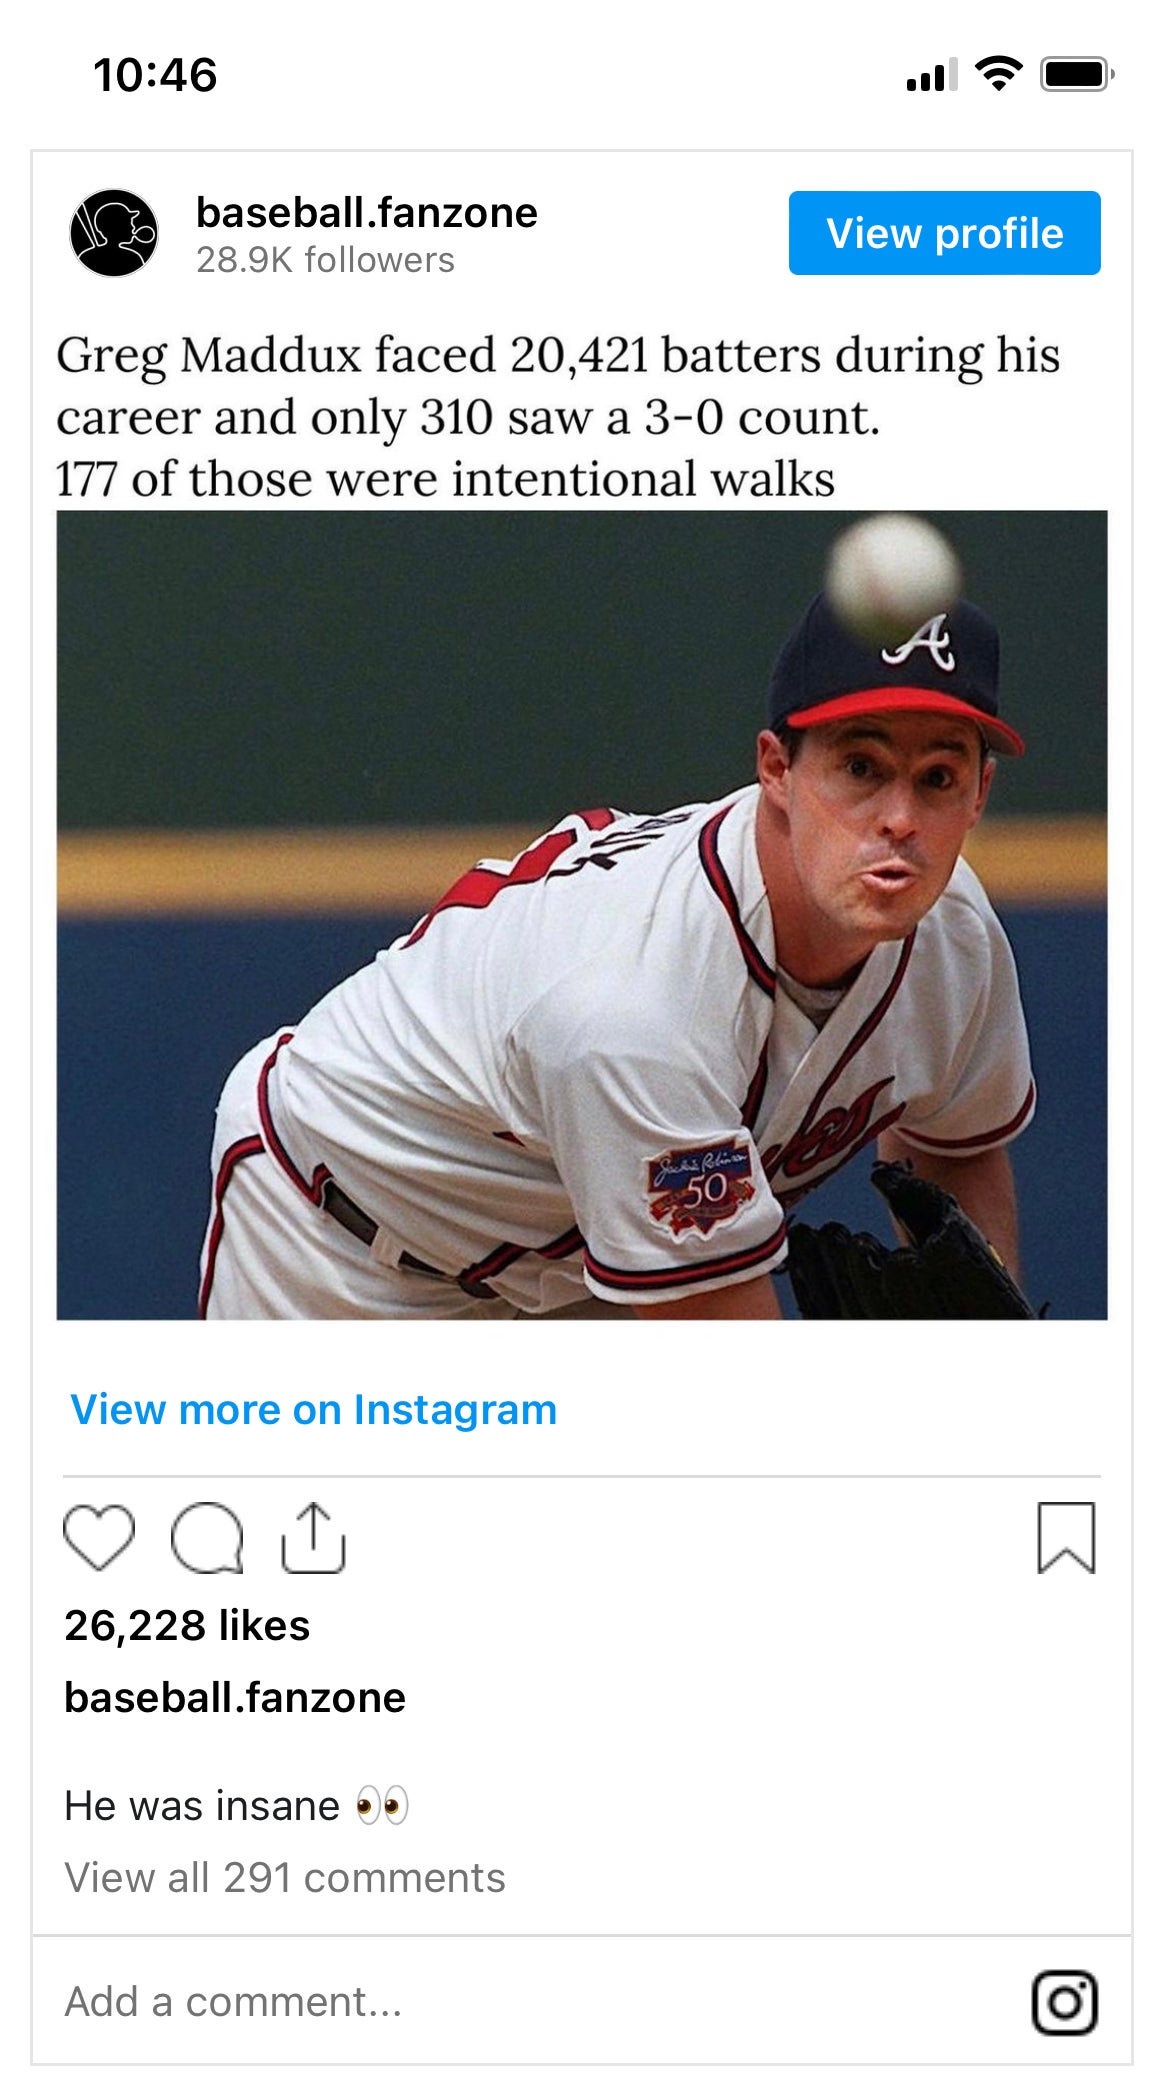 Baseballer - This Greg Maddux statistic is absolutely insane